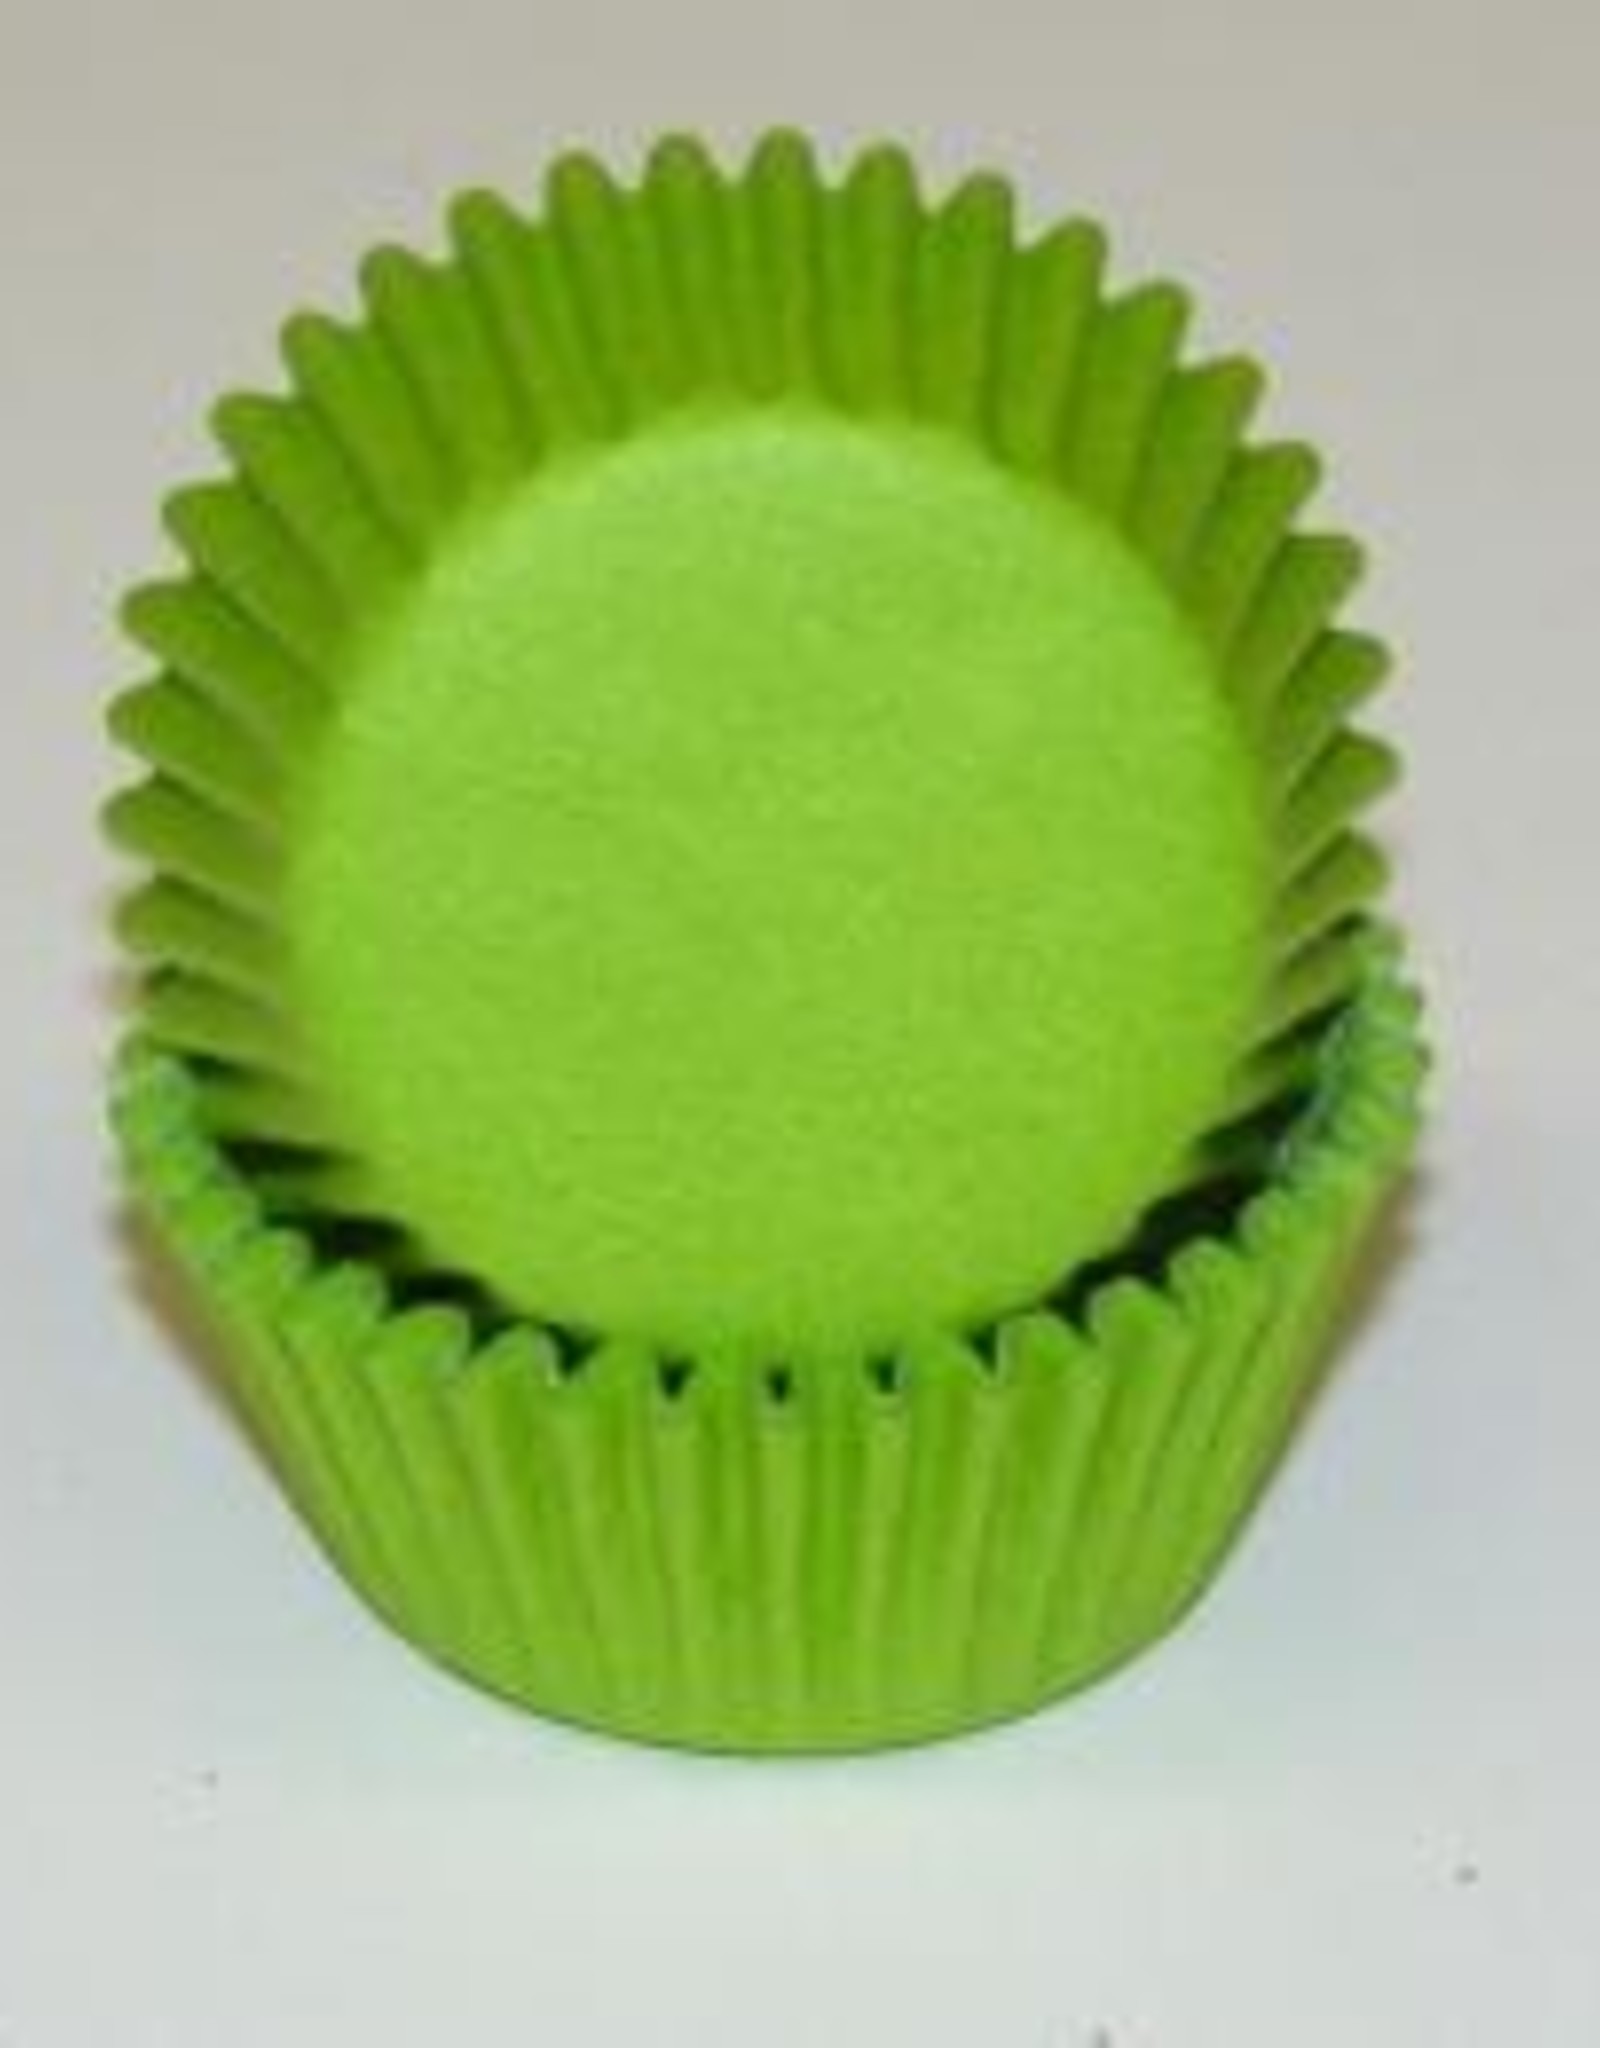 Lime Green Baking Cups Mini (40-50ct)